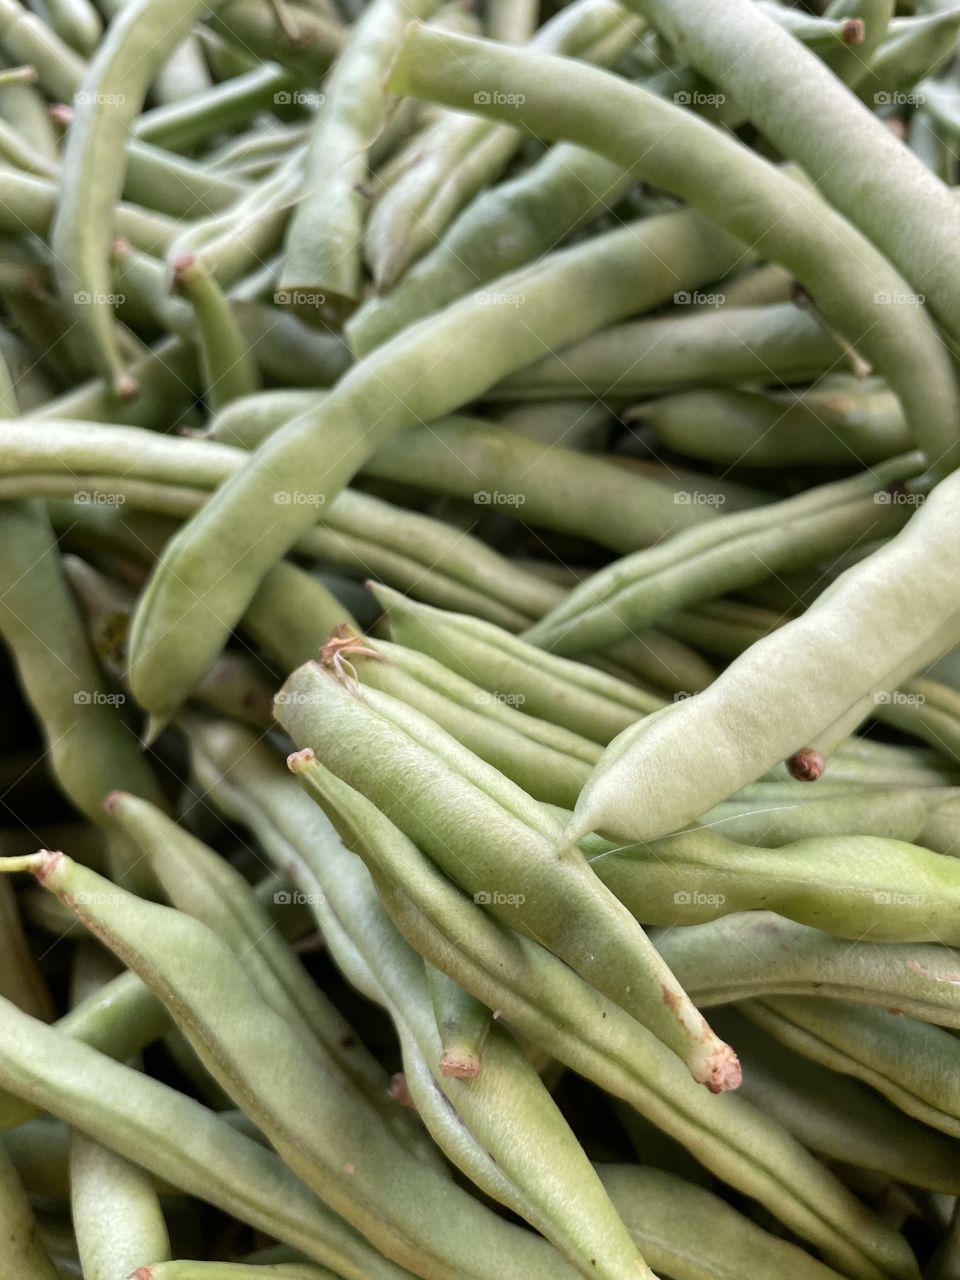 Baguio beans (green beans)